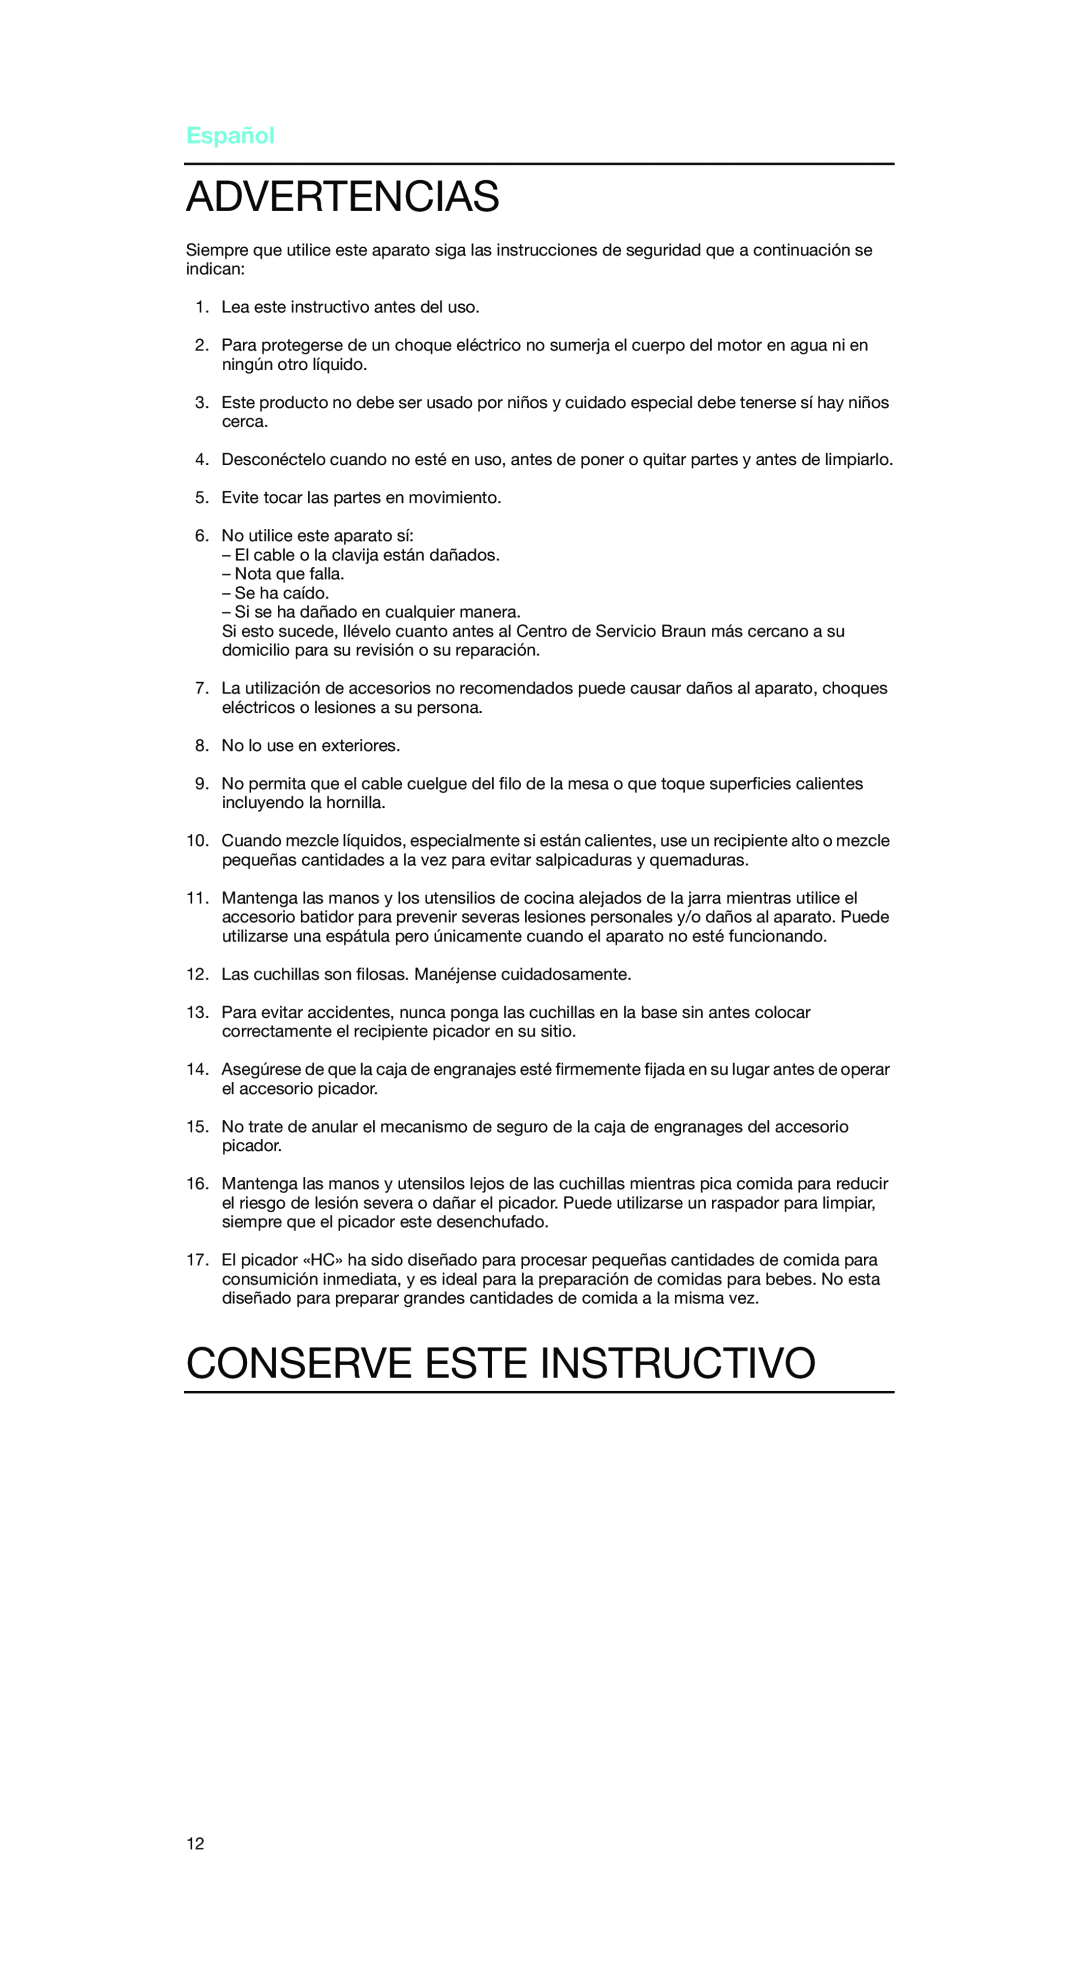 Braun MR 5550 CA manual Advertencias, Conserve Este Instructivo, Español 